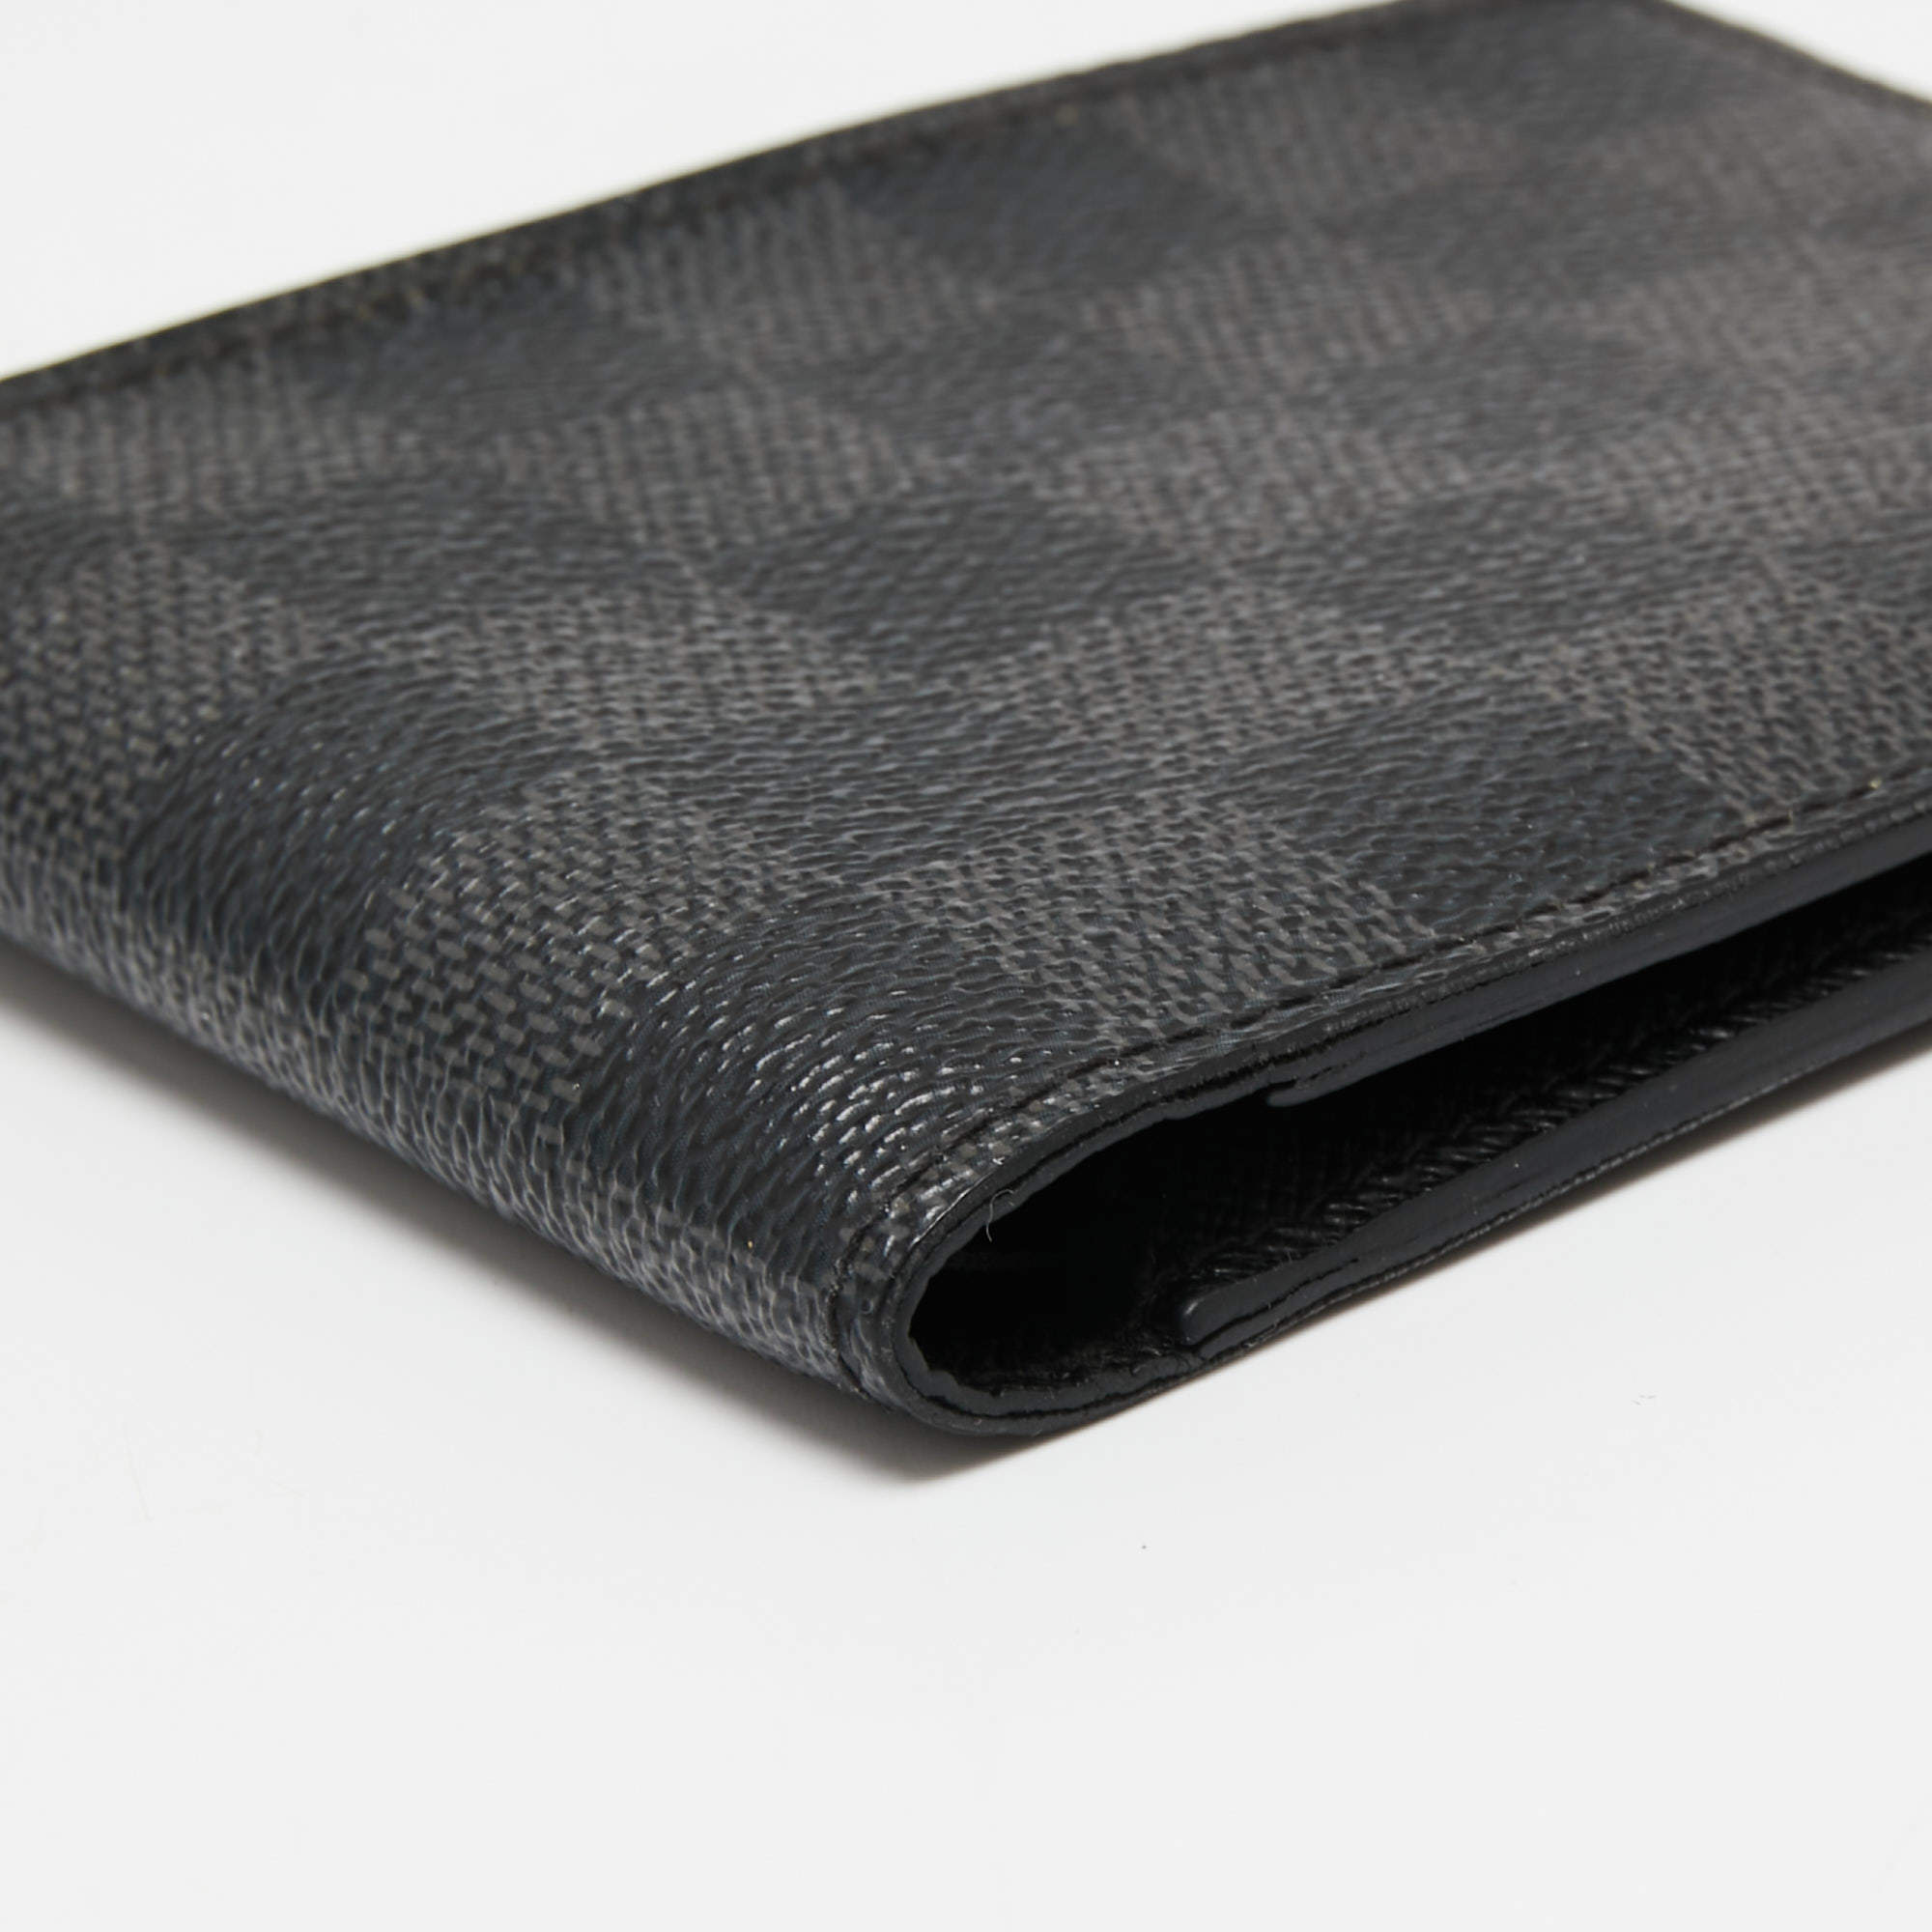 Buy Louis Vuitton Damier Graphite Canvas Multiple Wallet N63260 at